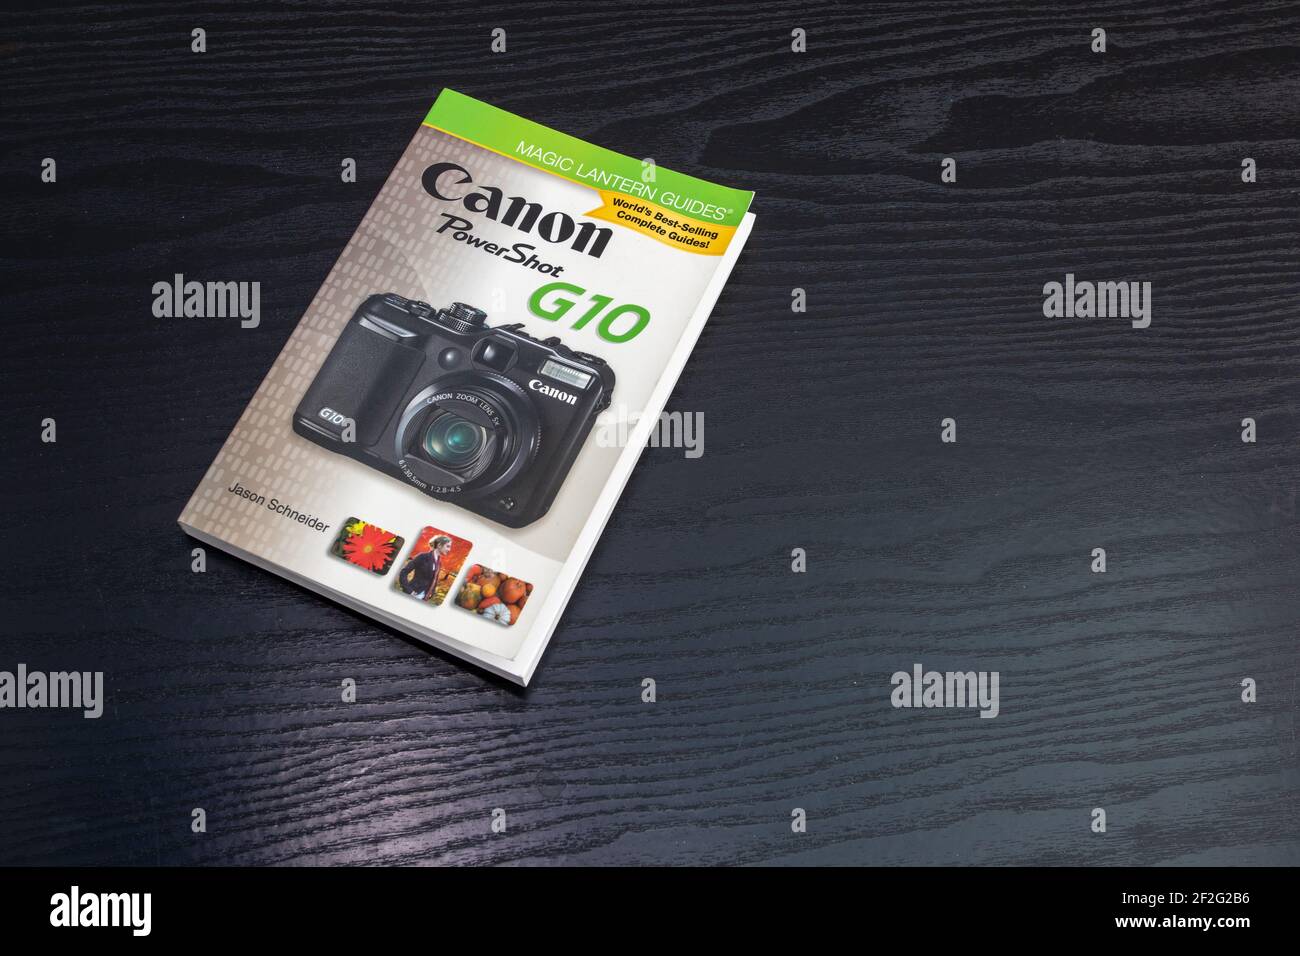 Jason Schneider's book on the Canon PowerShot G10 camera Stock Photo